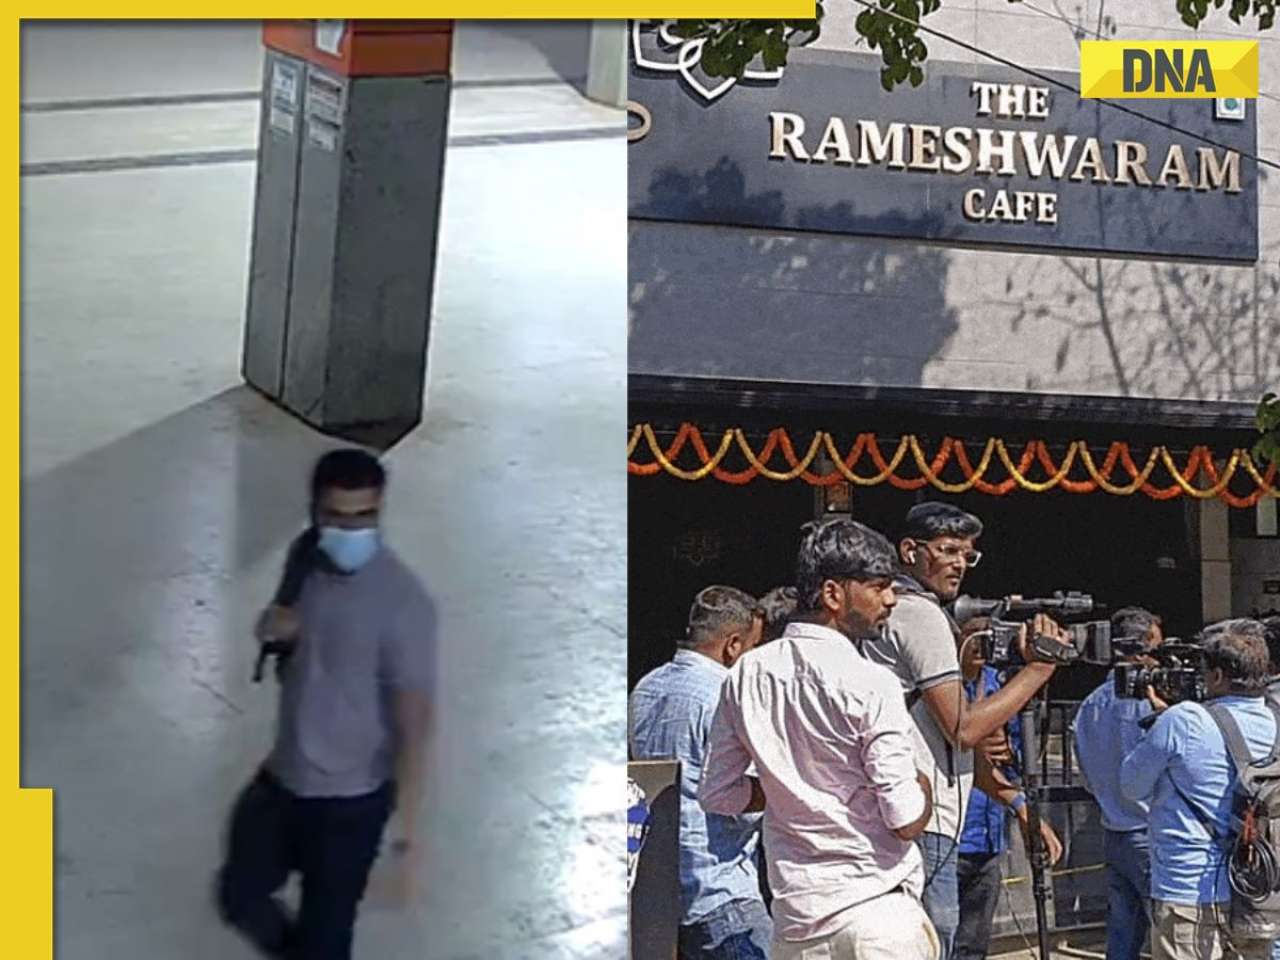 Rameshwaram cafe blast: NIA releases fresh CCTV footage of suspect, seeks help from public in…